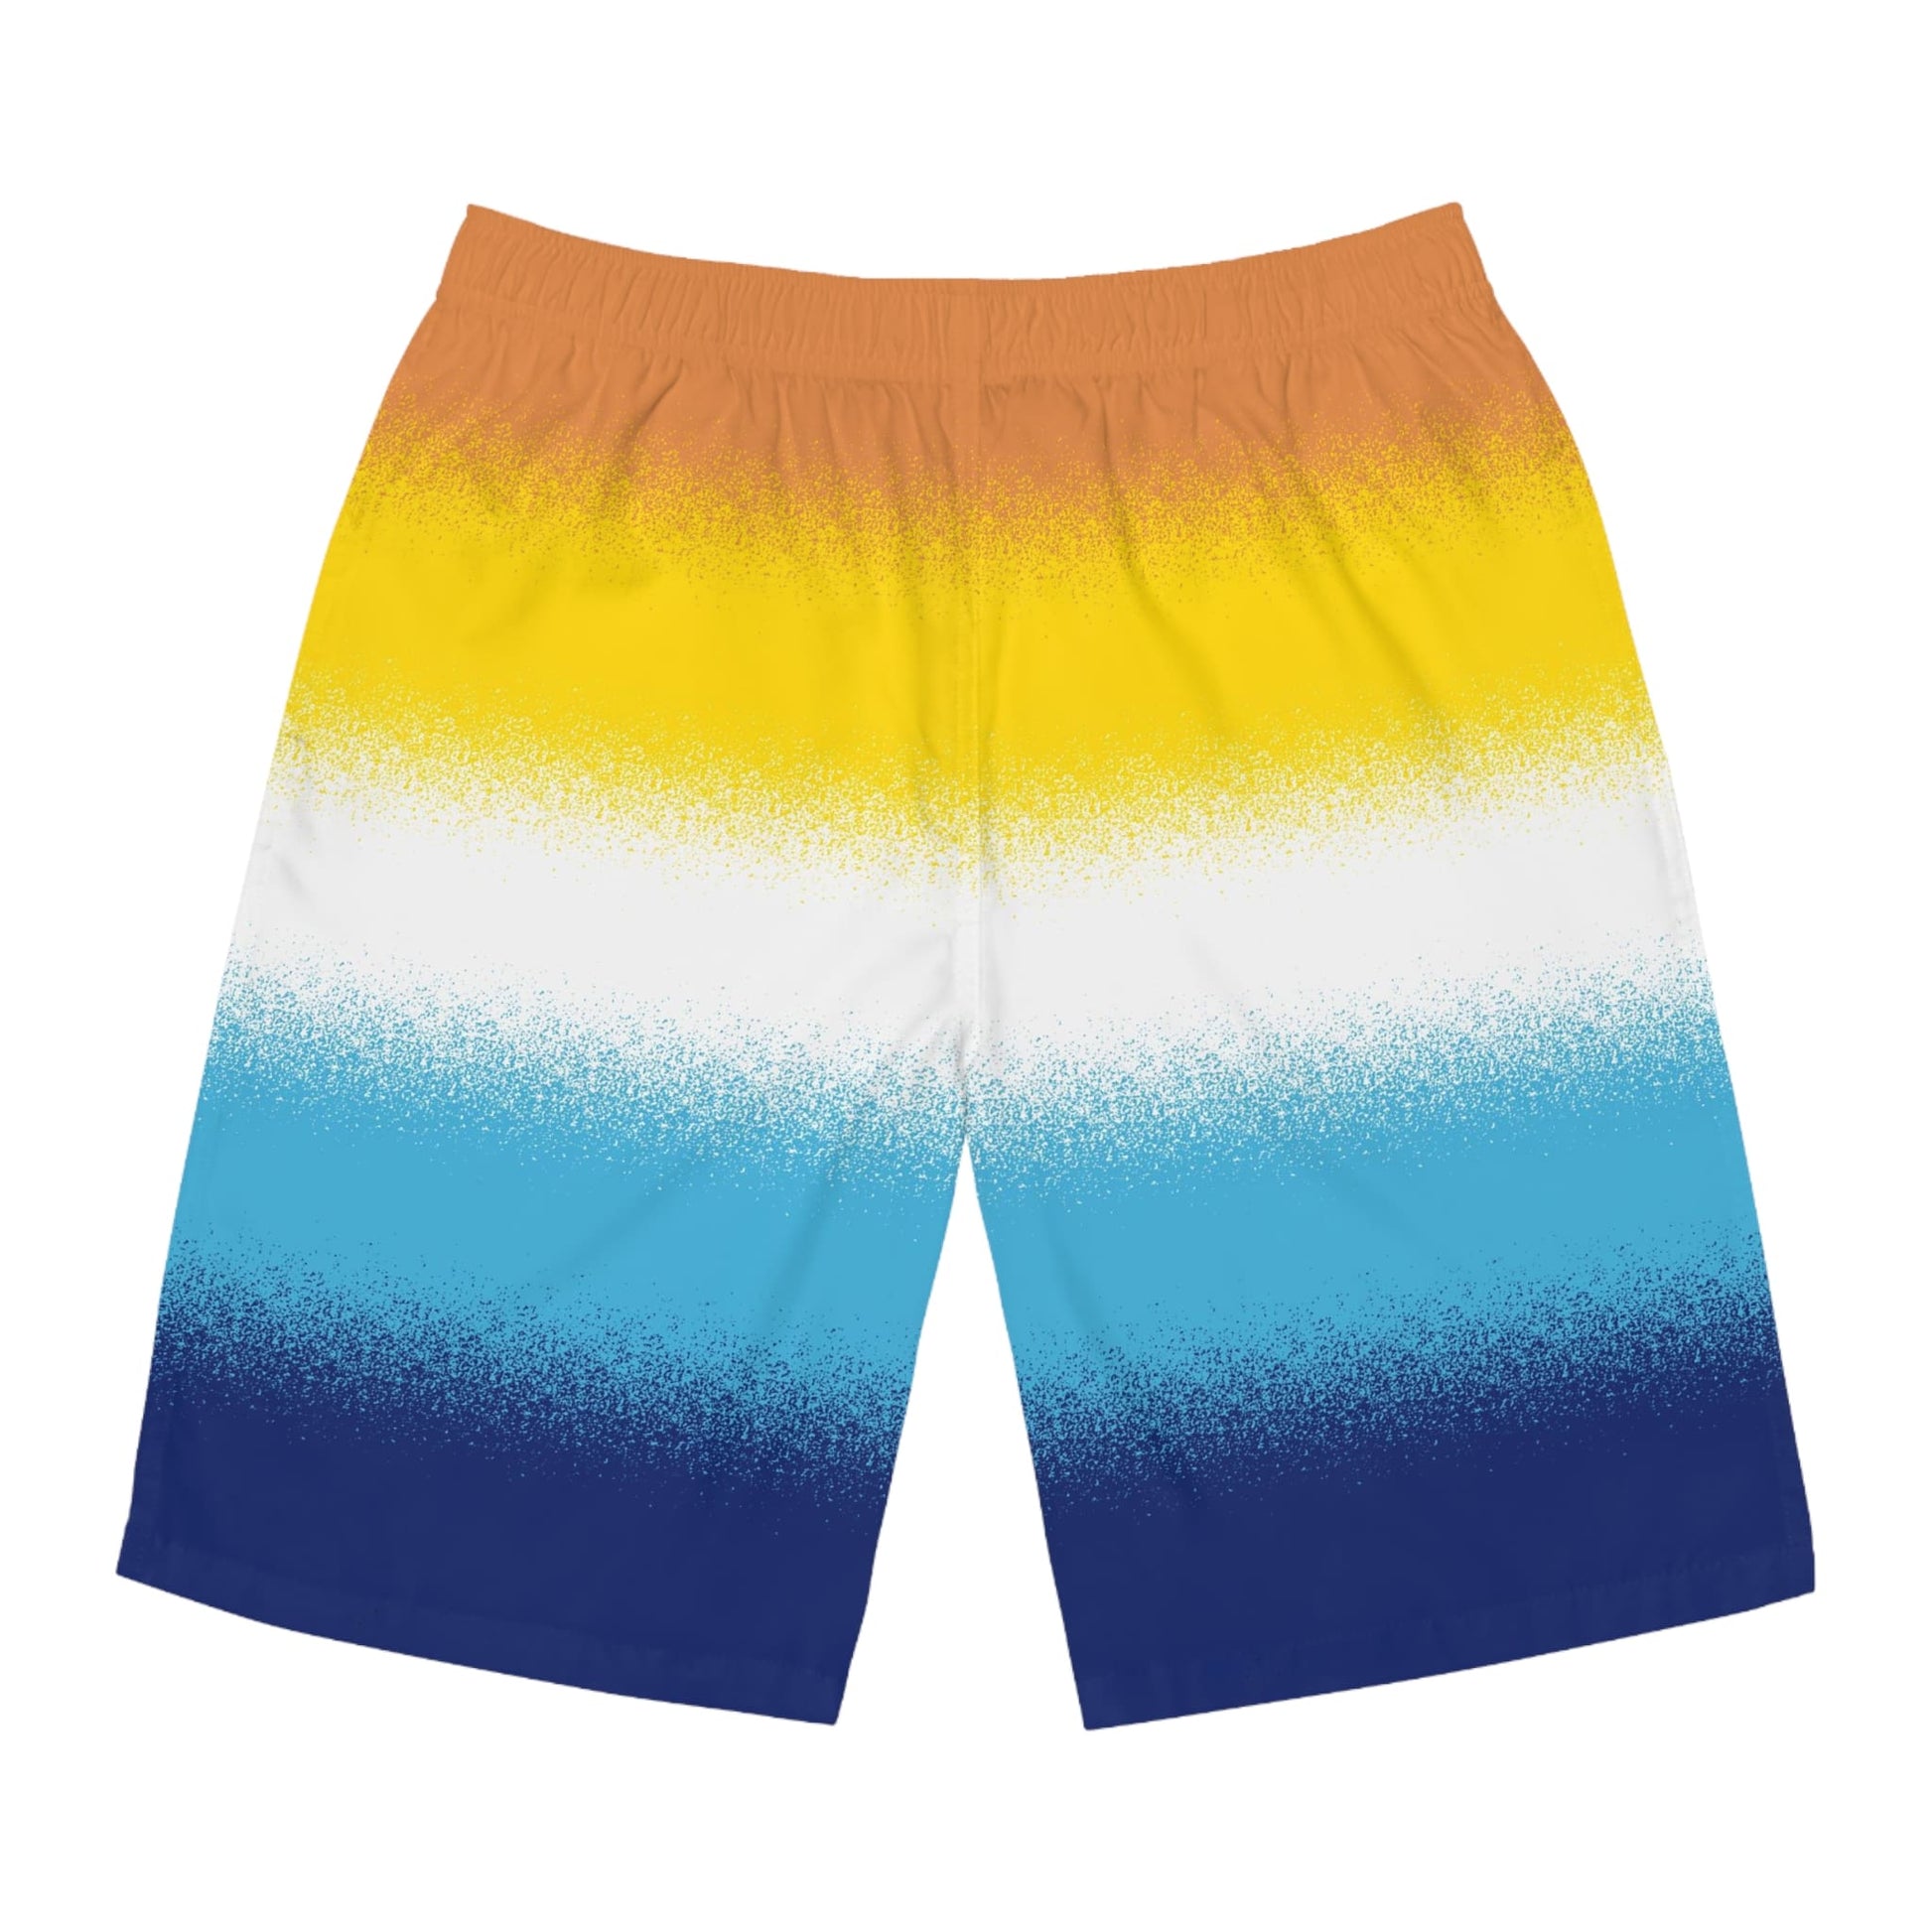 aroace swim shorts, flatlay